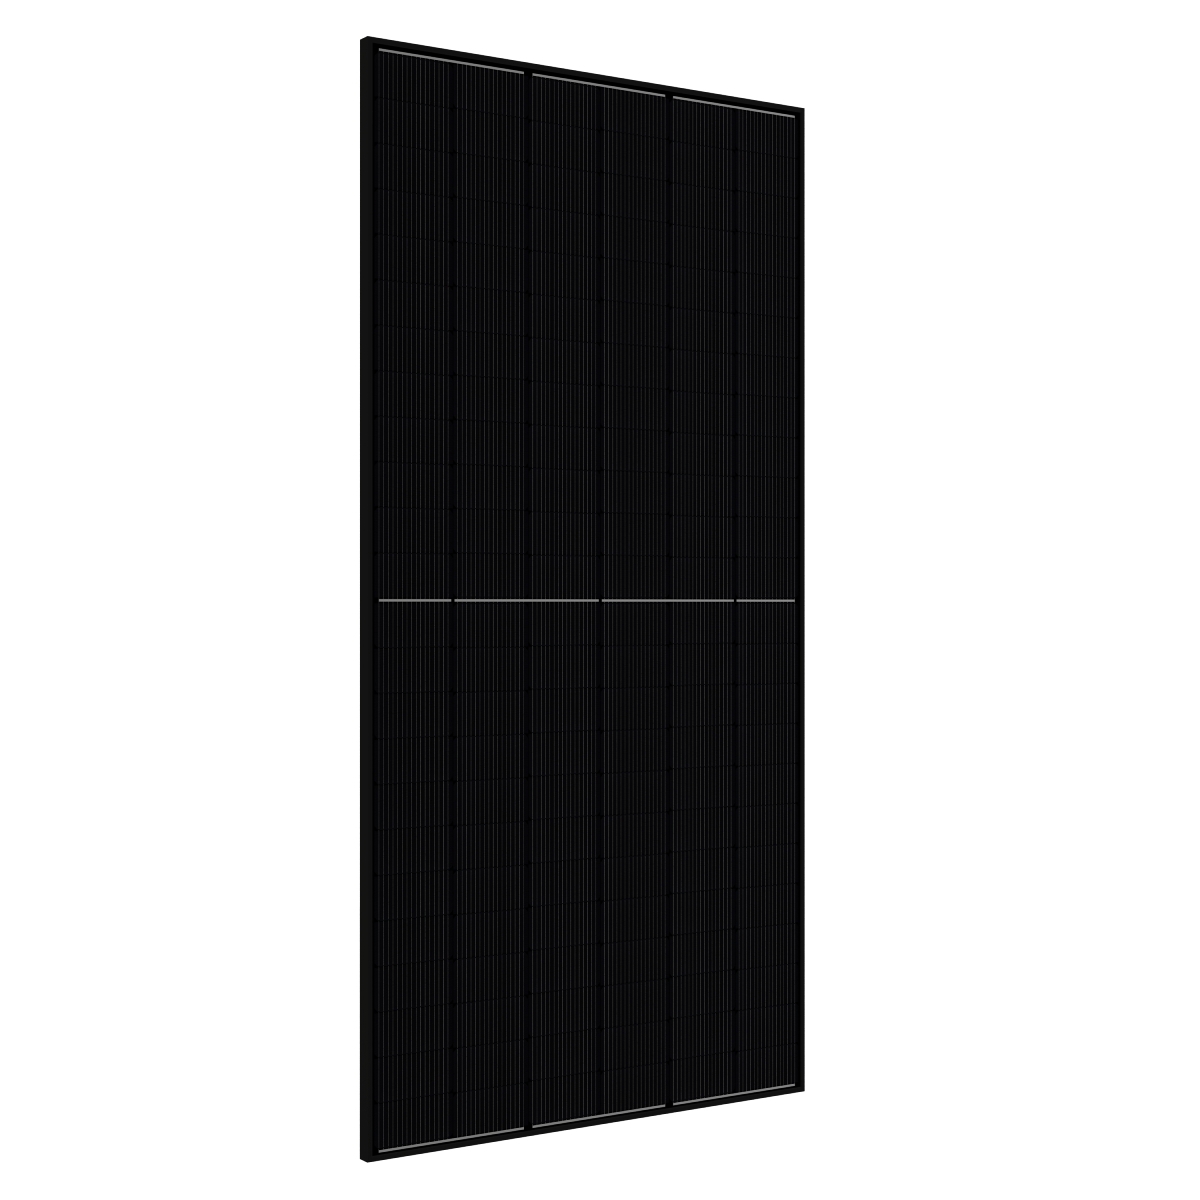 TommaTech 570Wp 144TNFB M10 TopCon Dark Series Solar Panel